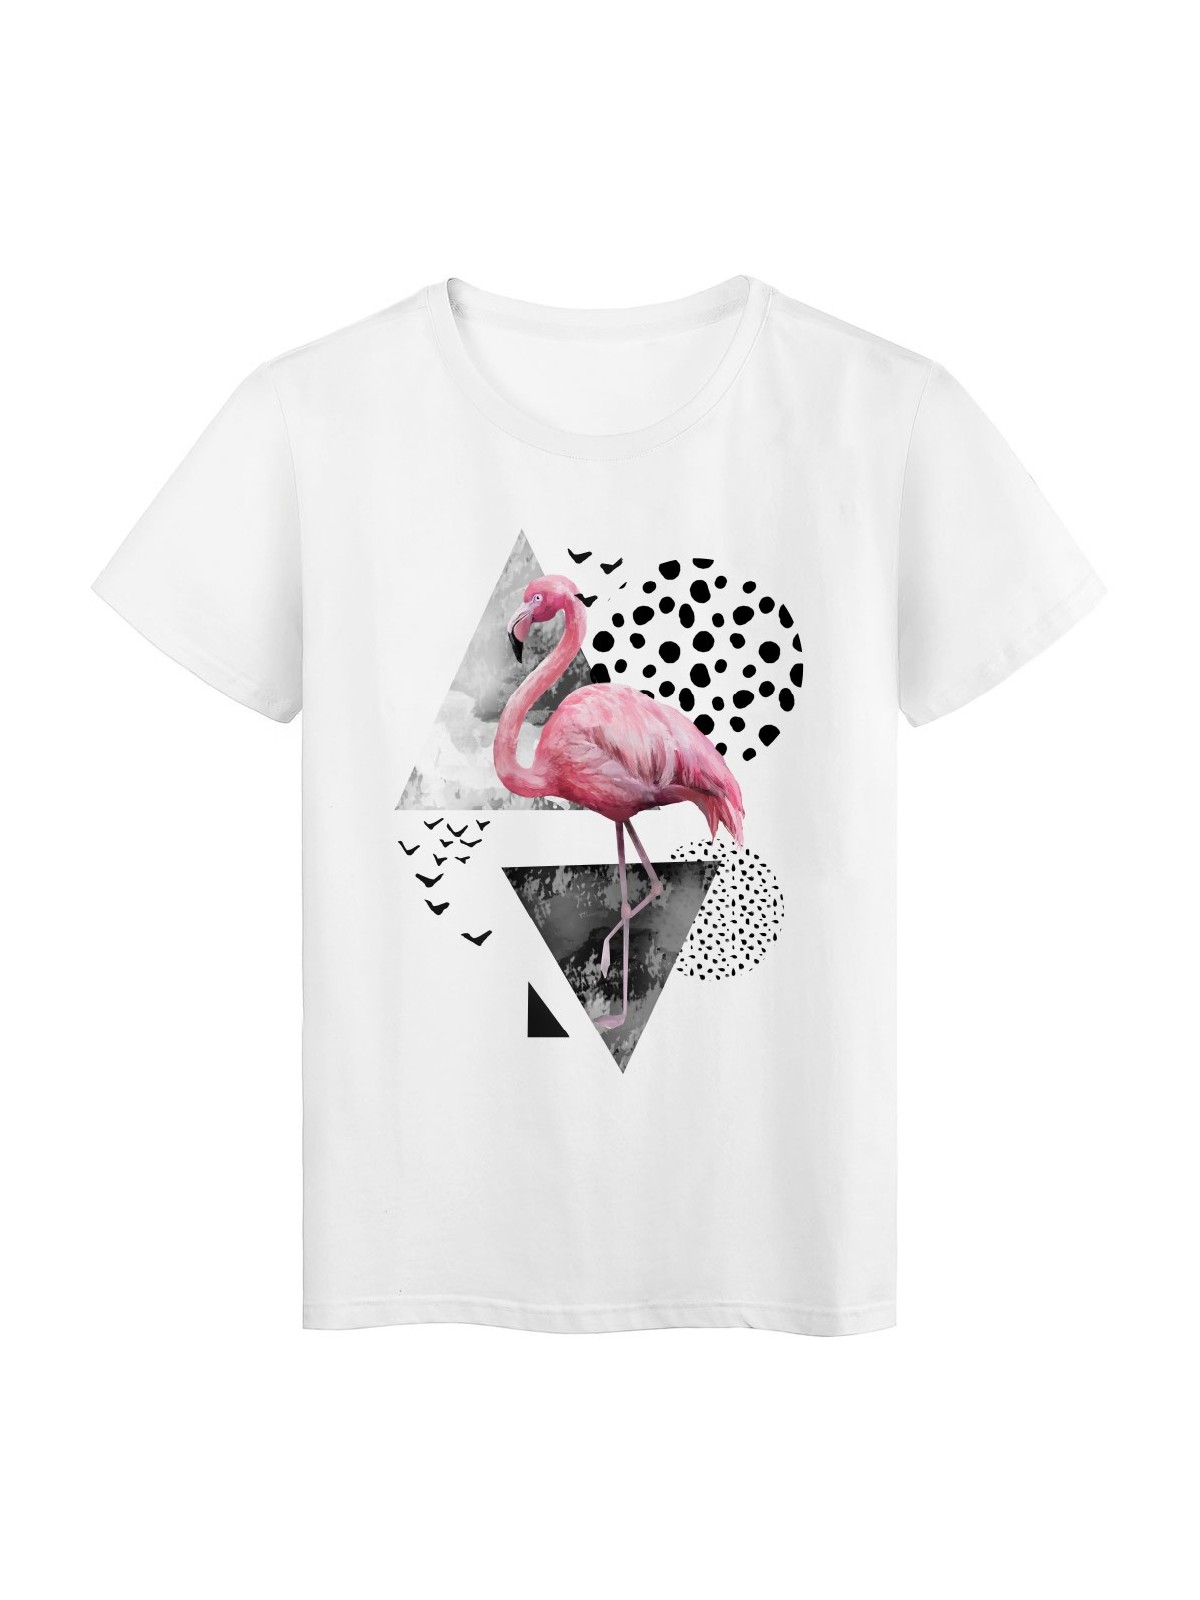 T-Shirt blanc design Flamant rose rÃ©f Tee shirt 2146